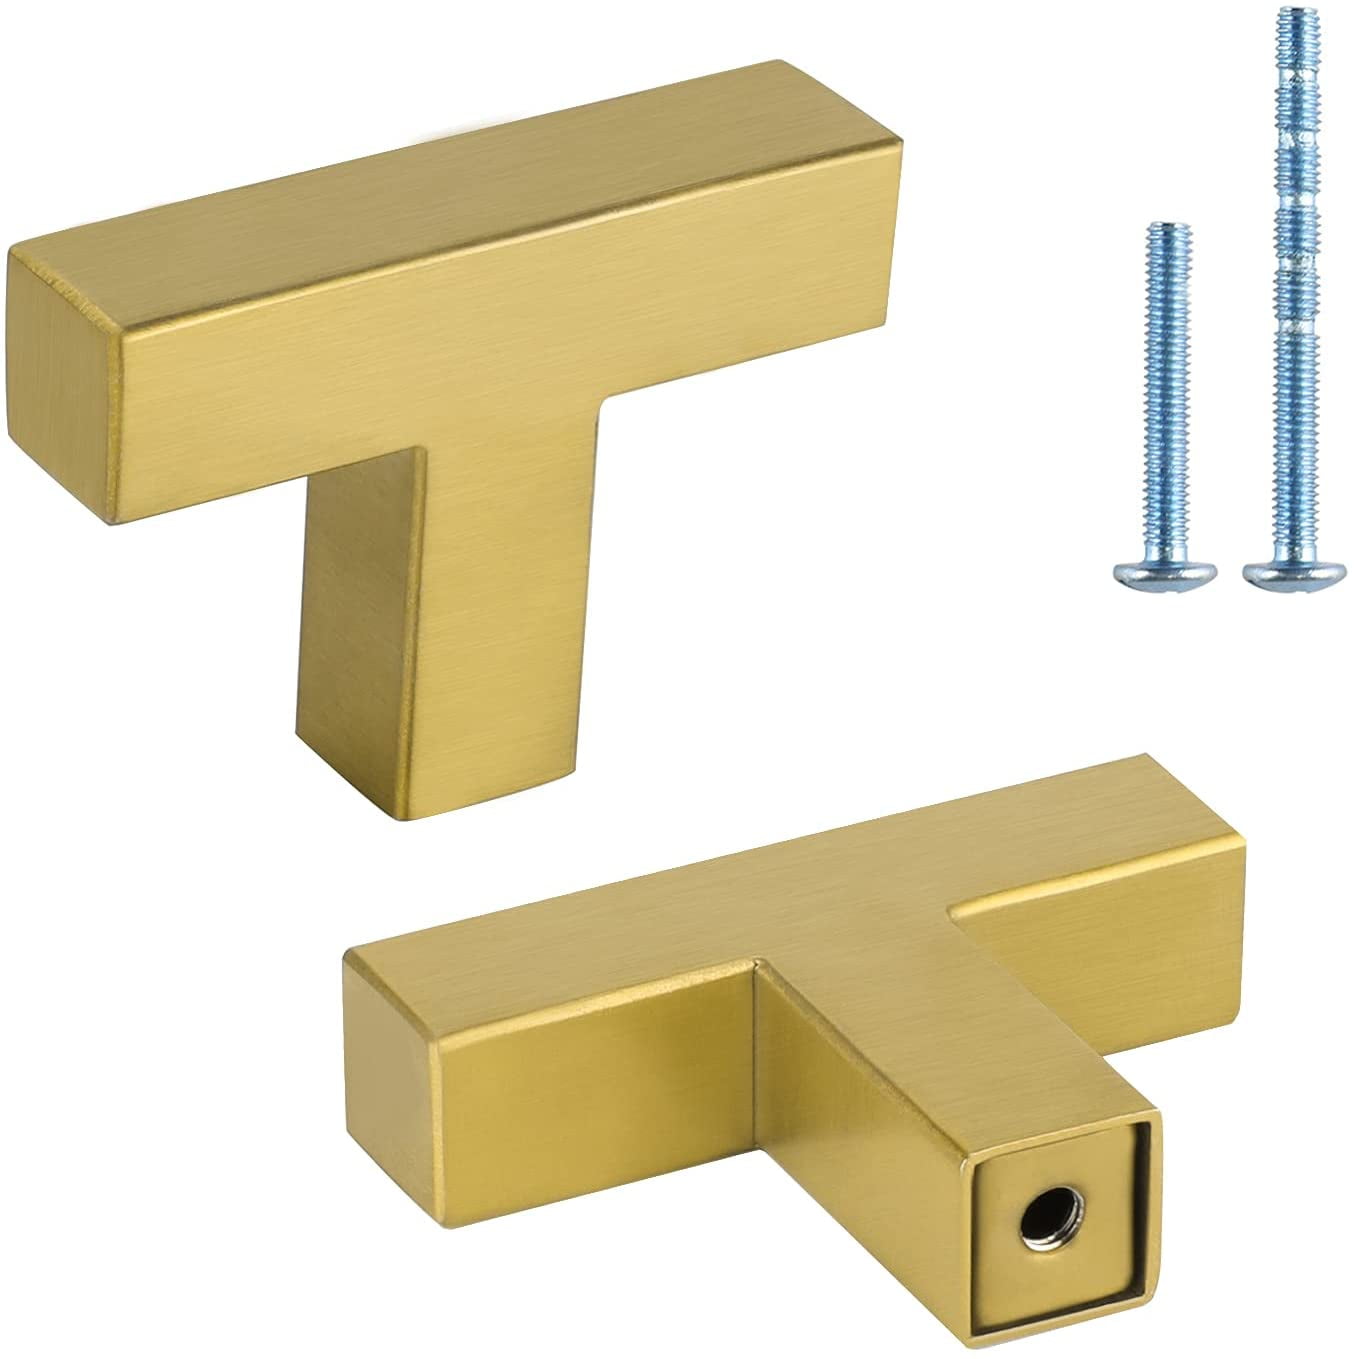 Door Hardware & Locks Solid Brass Cabinet Knobs Drawer Handle Dresser Pull Color : Golden, Size : 35mm Luxury Premium Artisan Handmade Knobs Handles Hardware，Set of 2